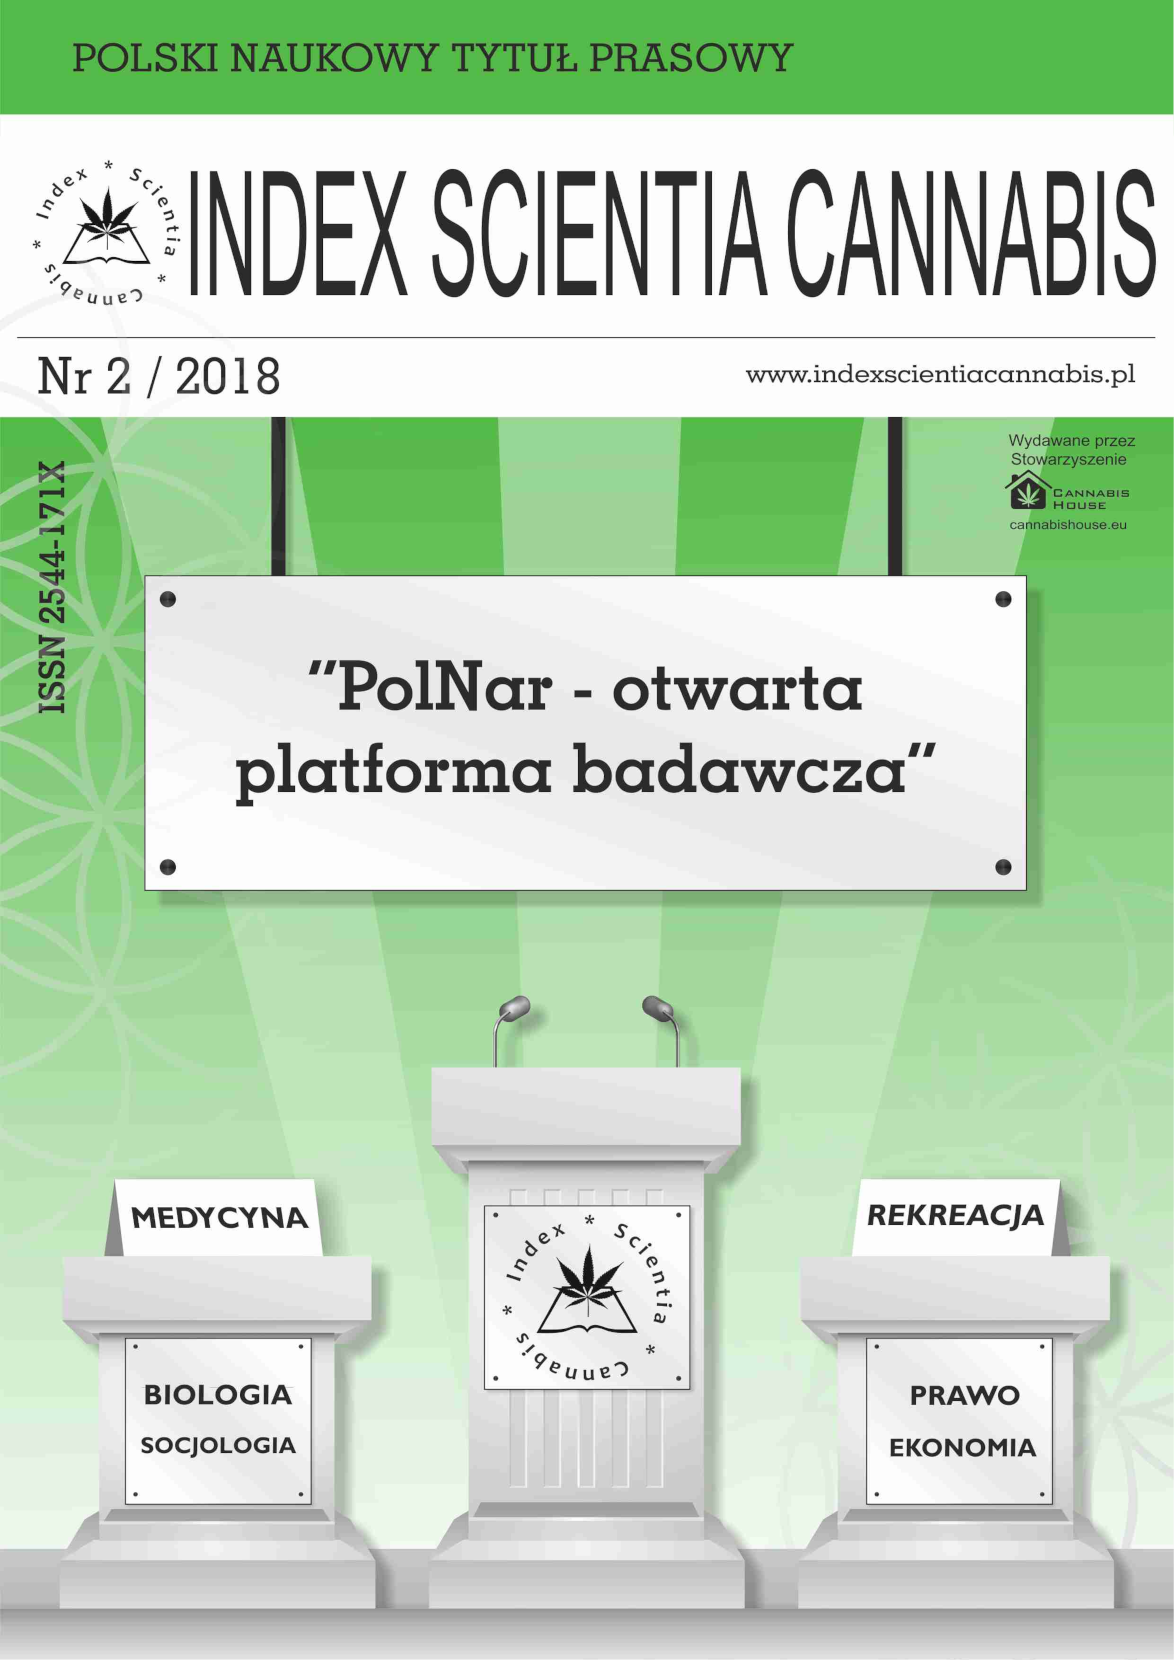 Okładka dla wydania nr 2 magazynu Index Scientia Cannabis